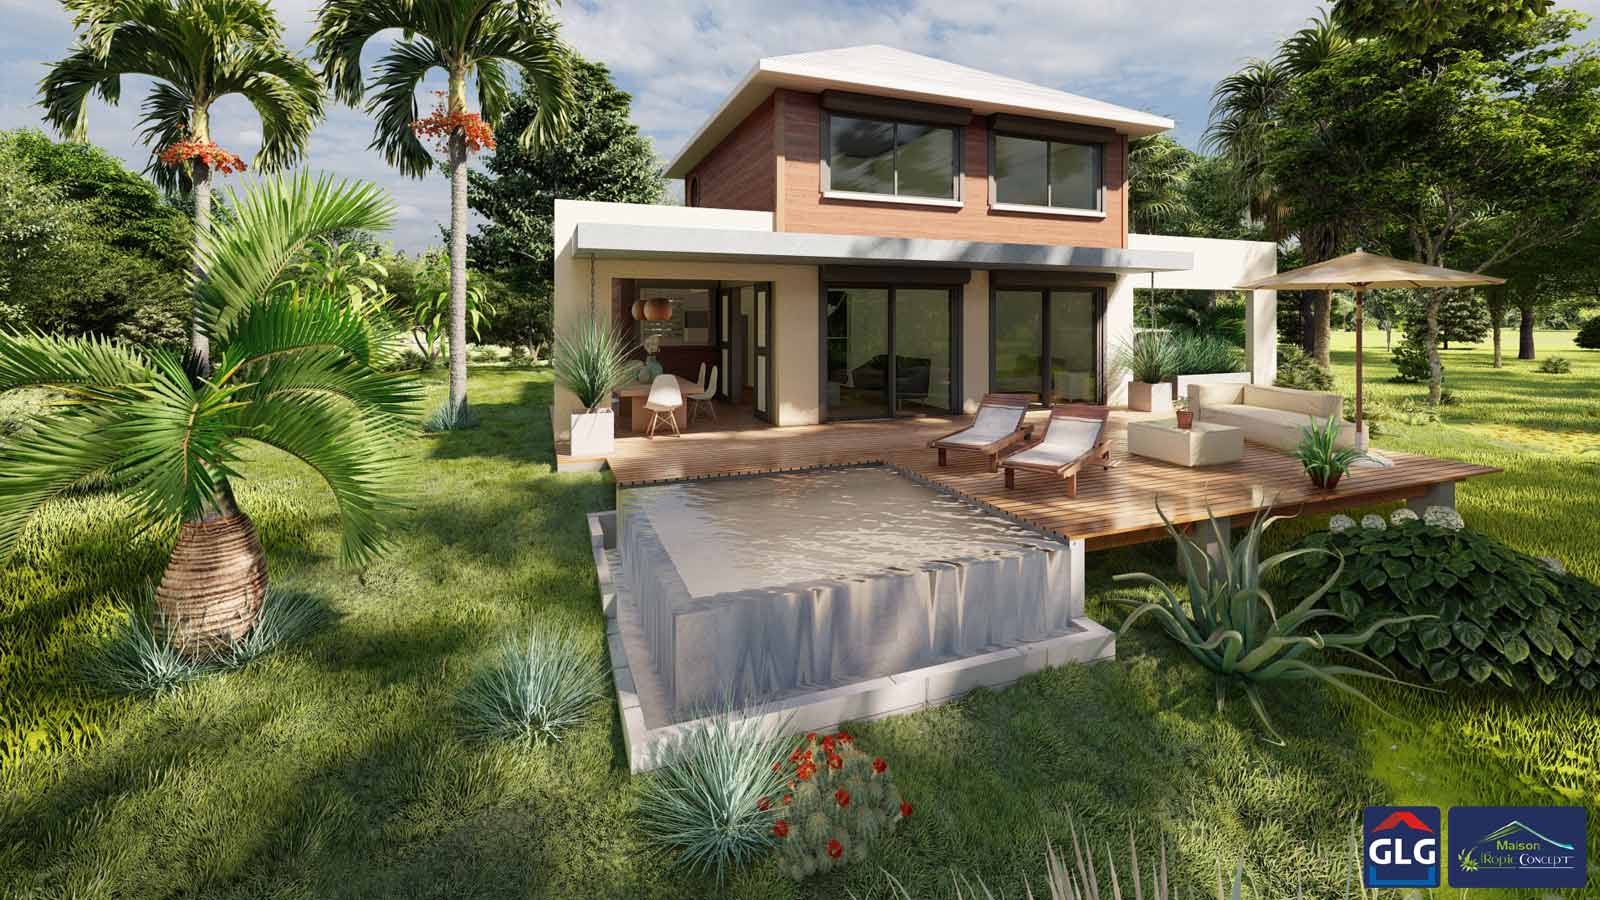 Modele GLG Maison Tropic Concept Solaria